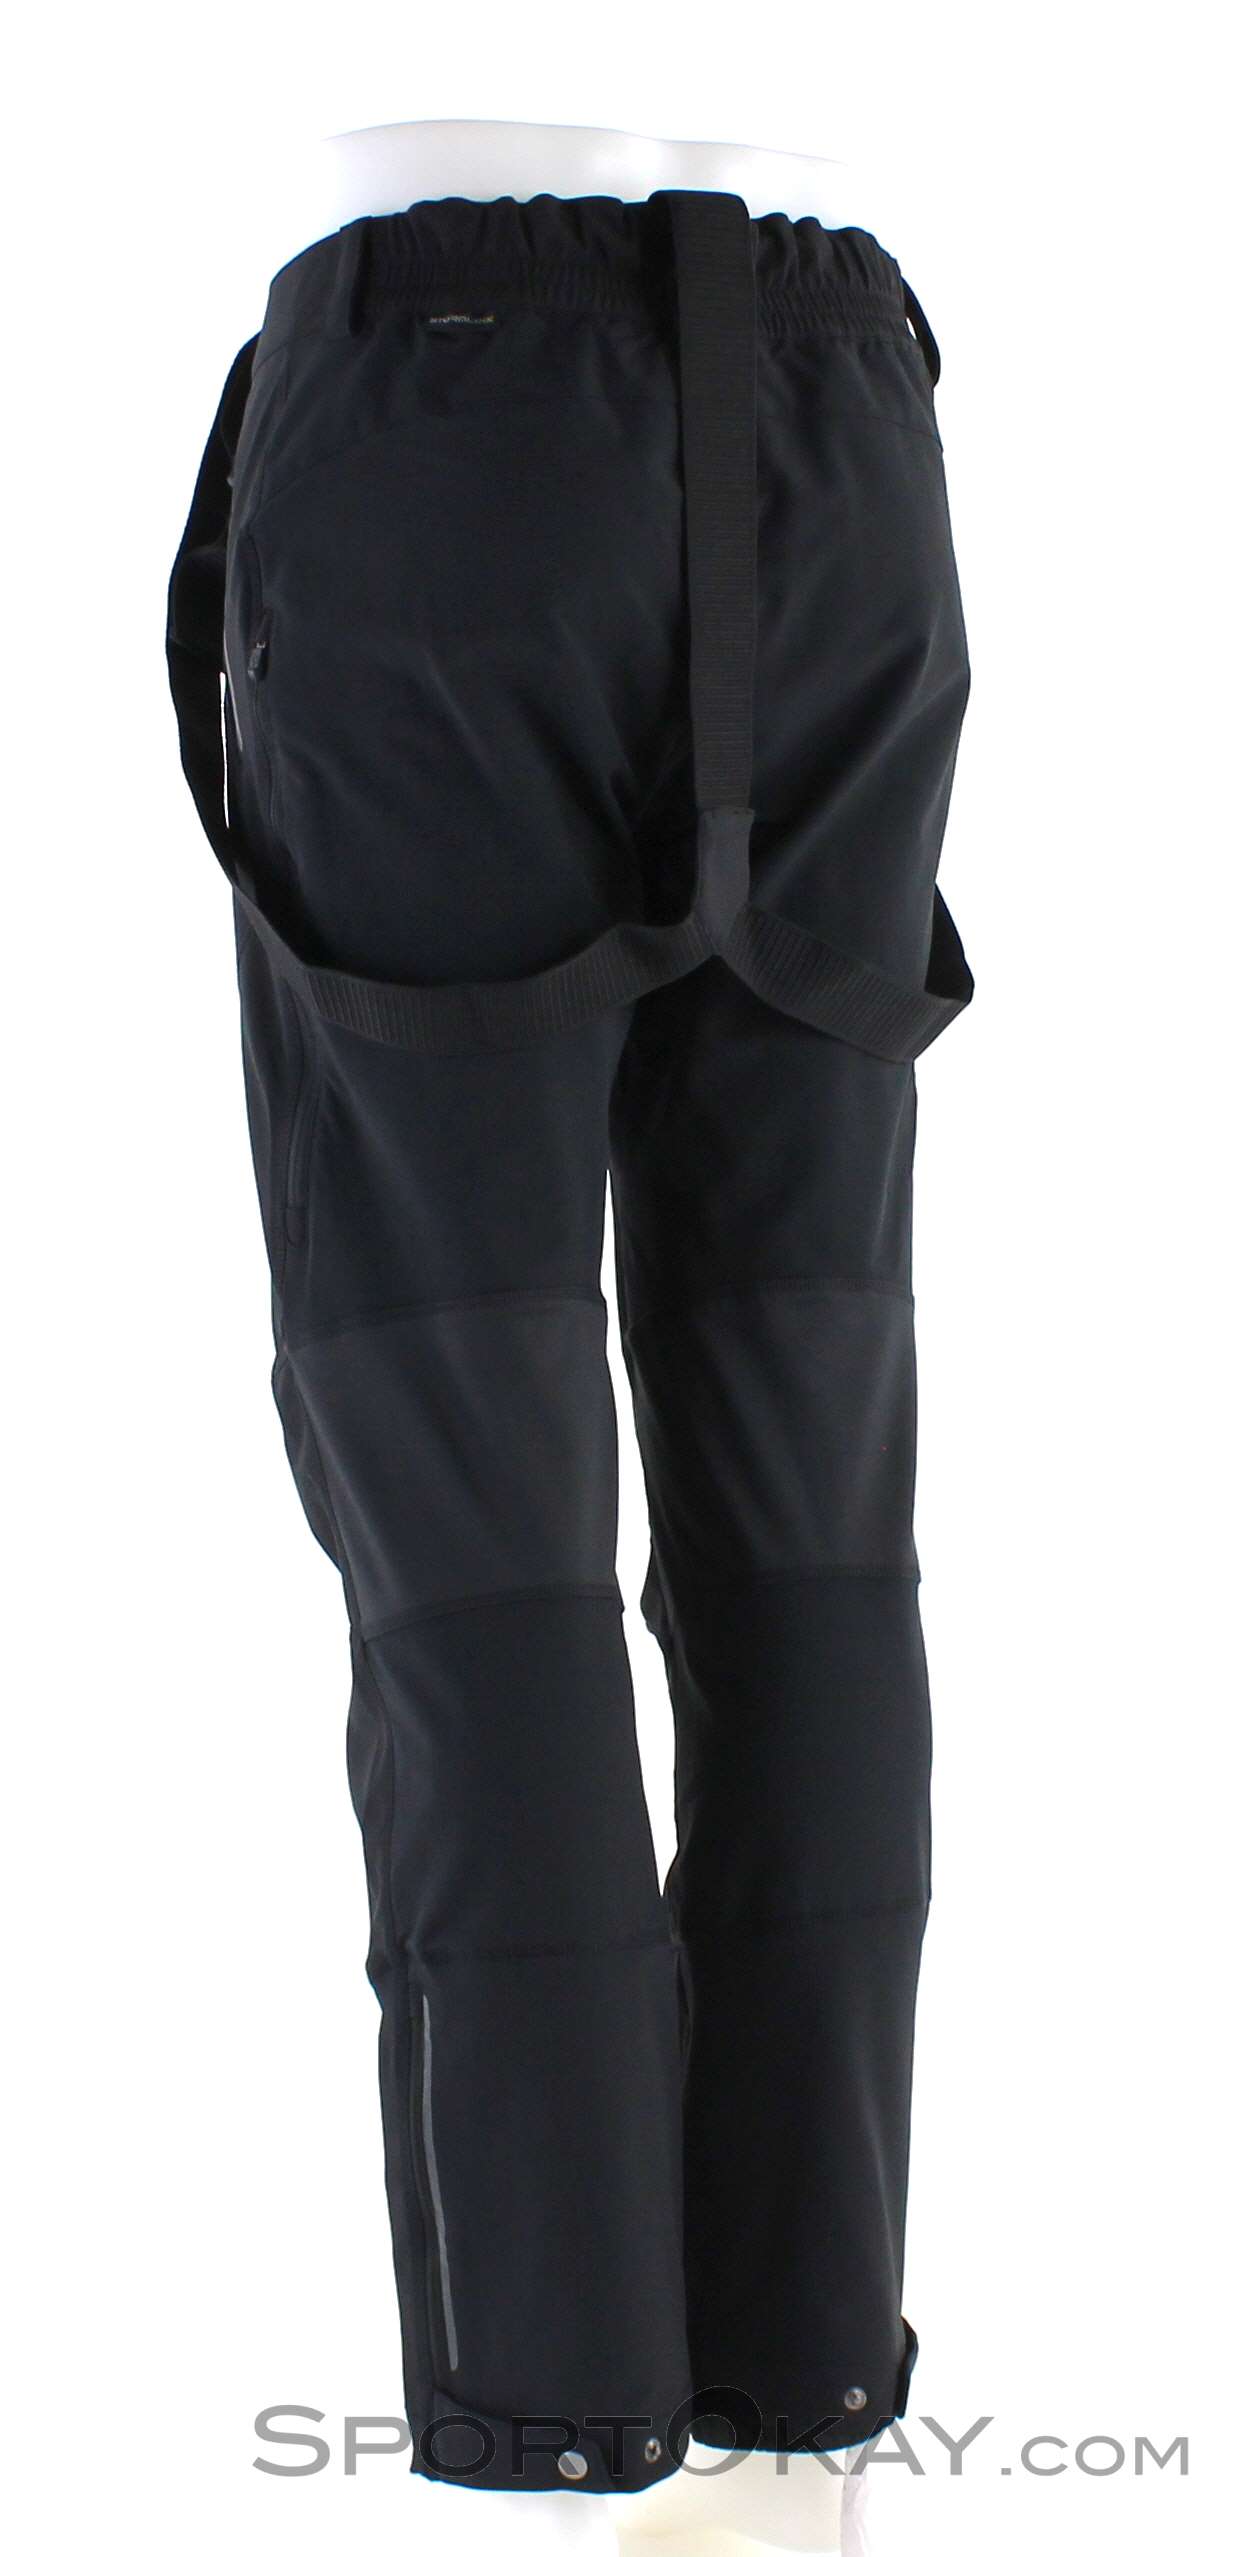 Jack Wolfskin Gravity - Ski Clothing Freeride - - Touring Pants Pants Tour Ski Ski Pants & Mens Ski - All